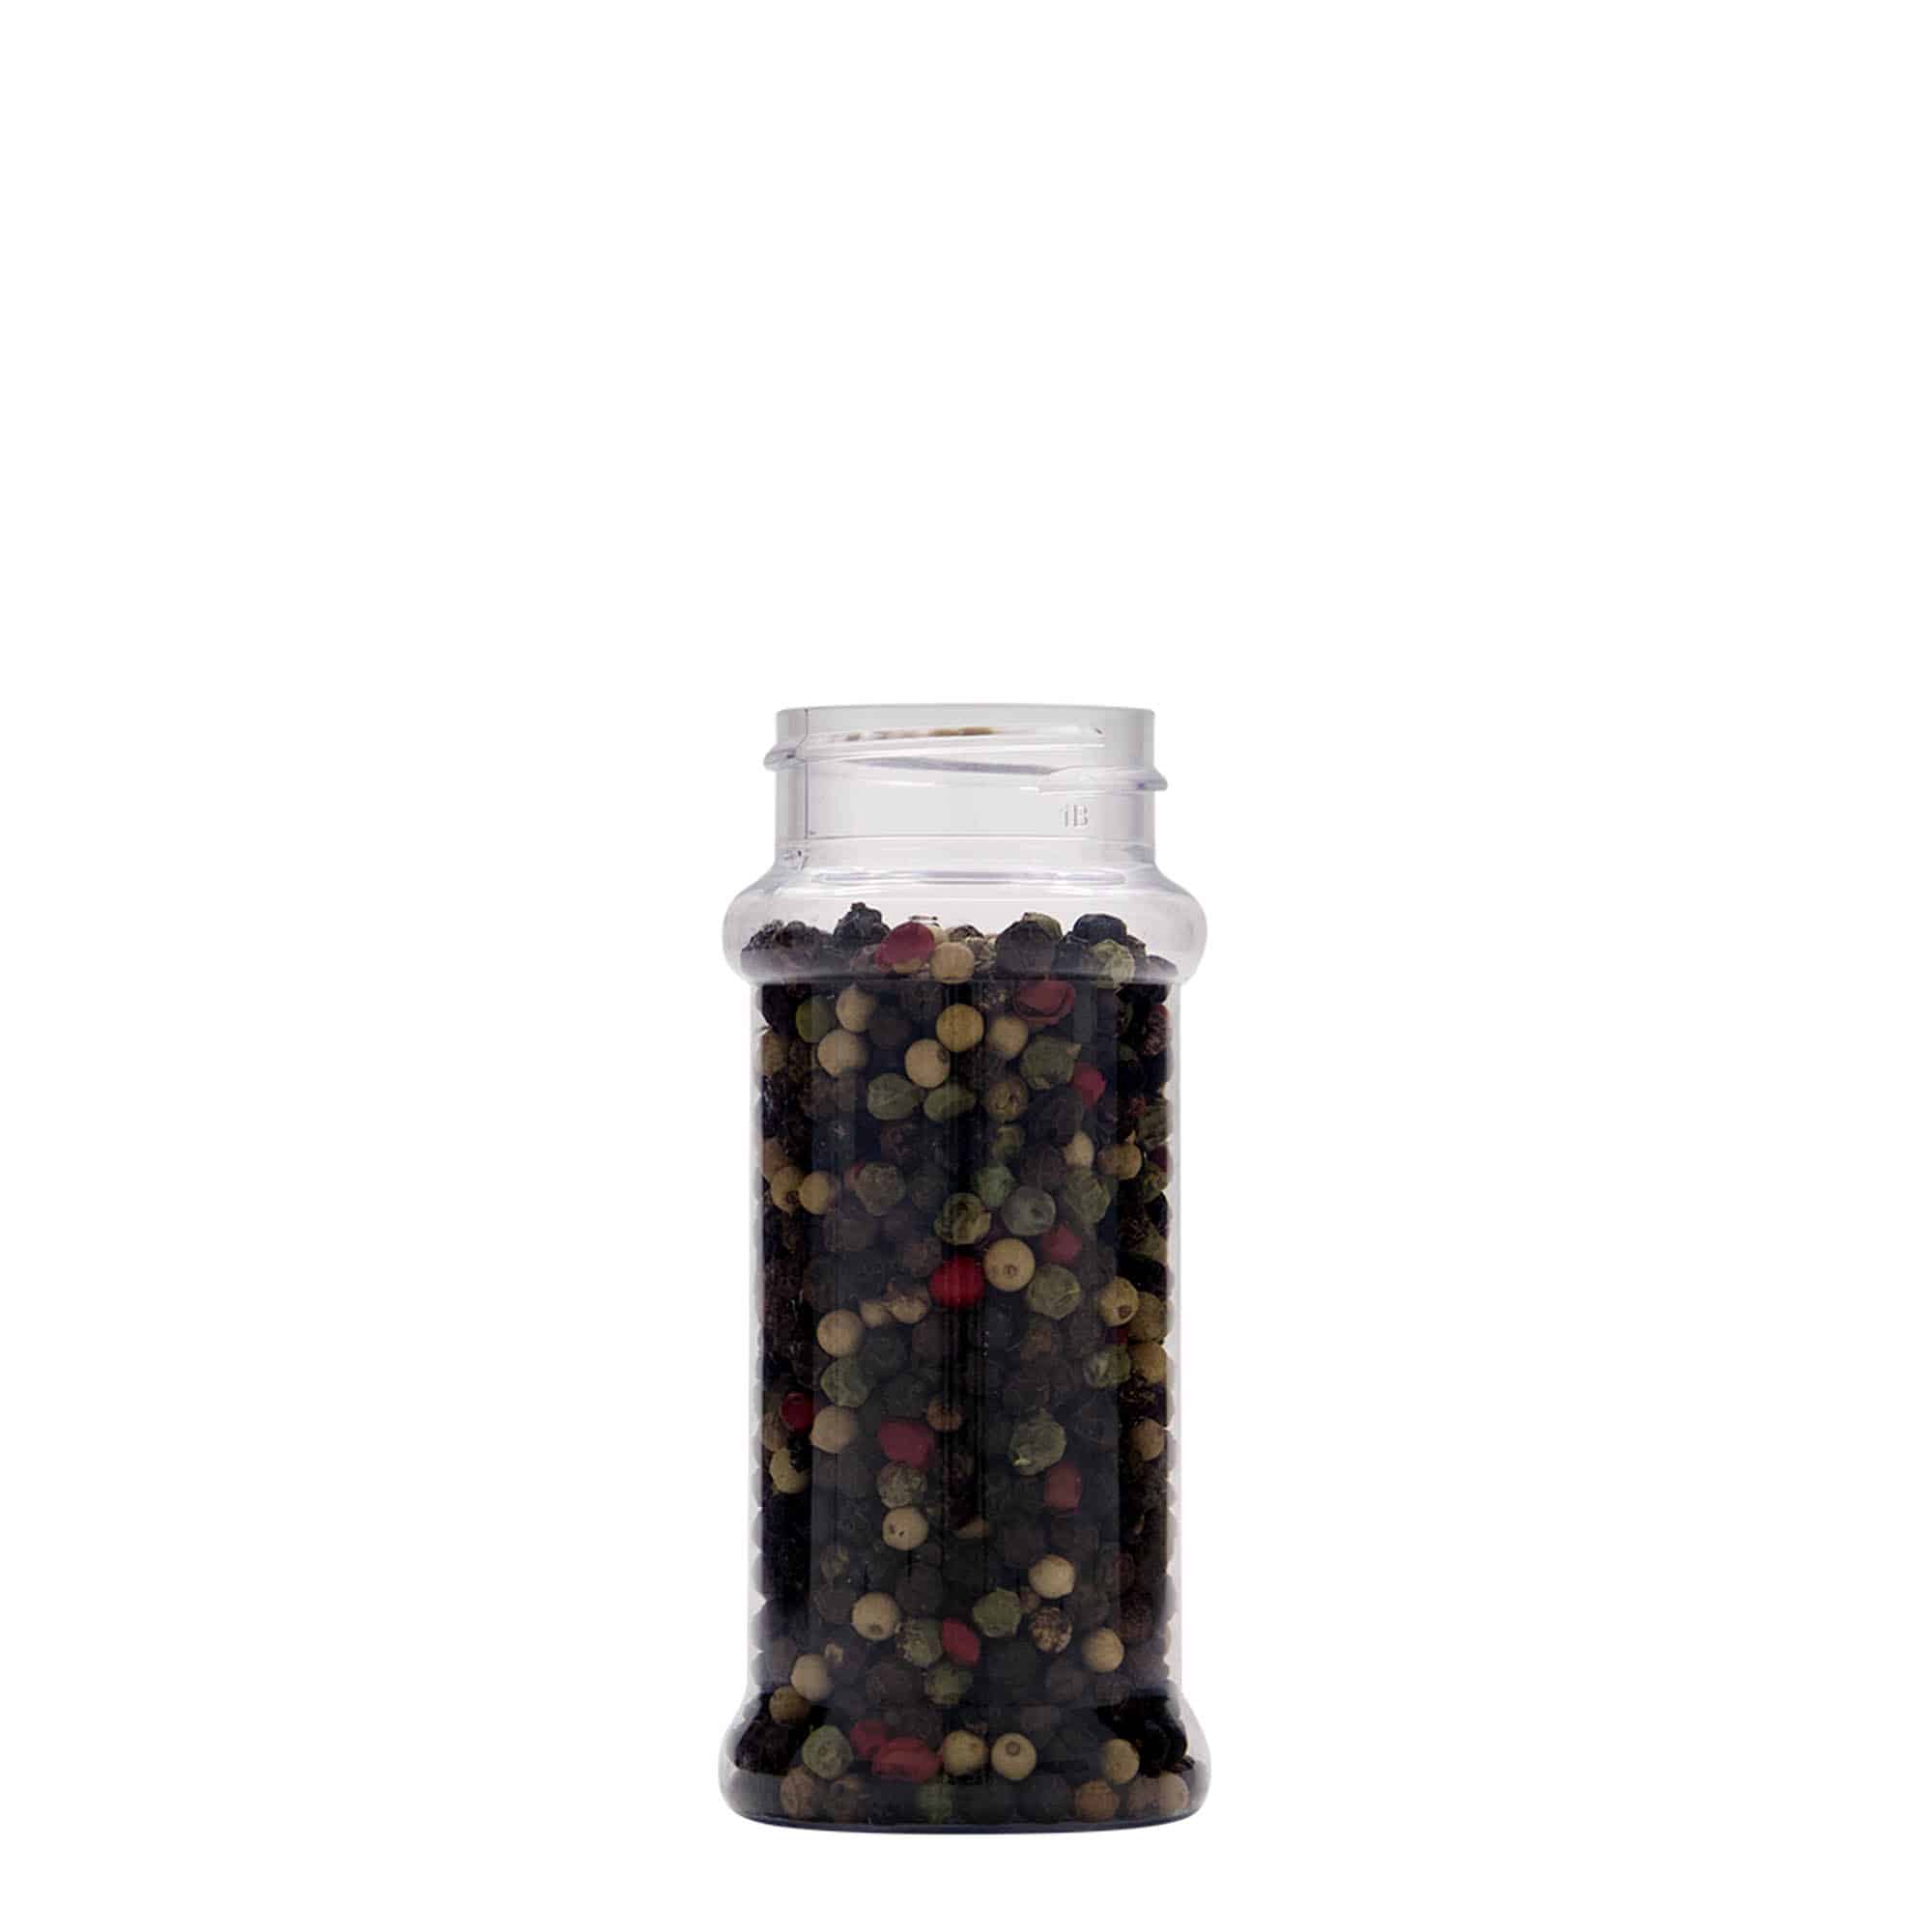 100 ml PET spice jar, plastic, closure: GPI 38/400